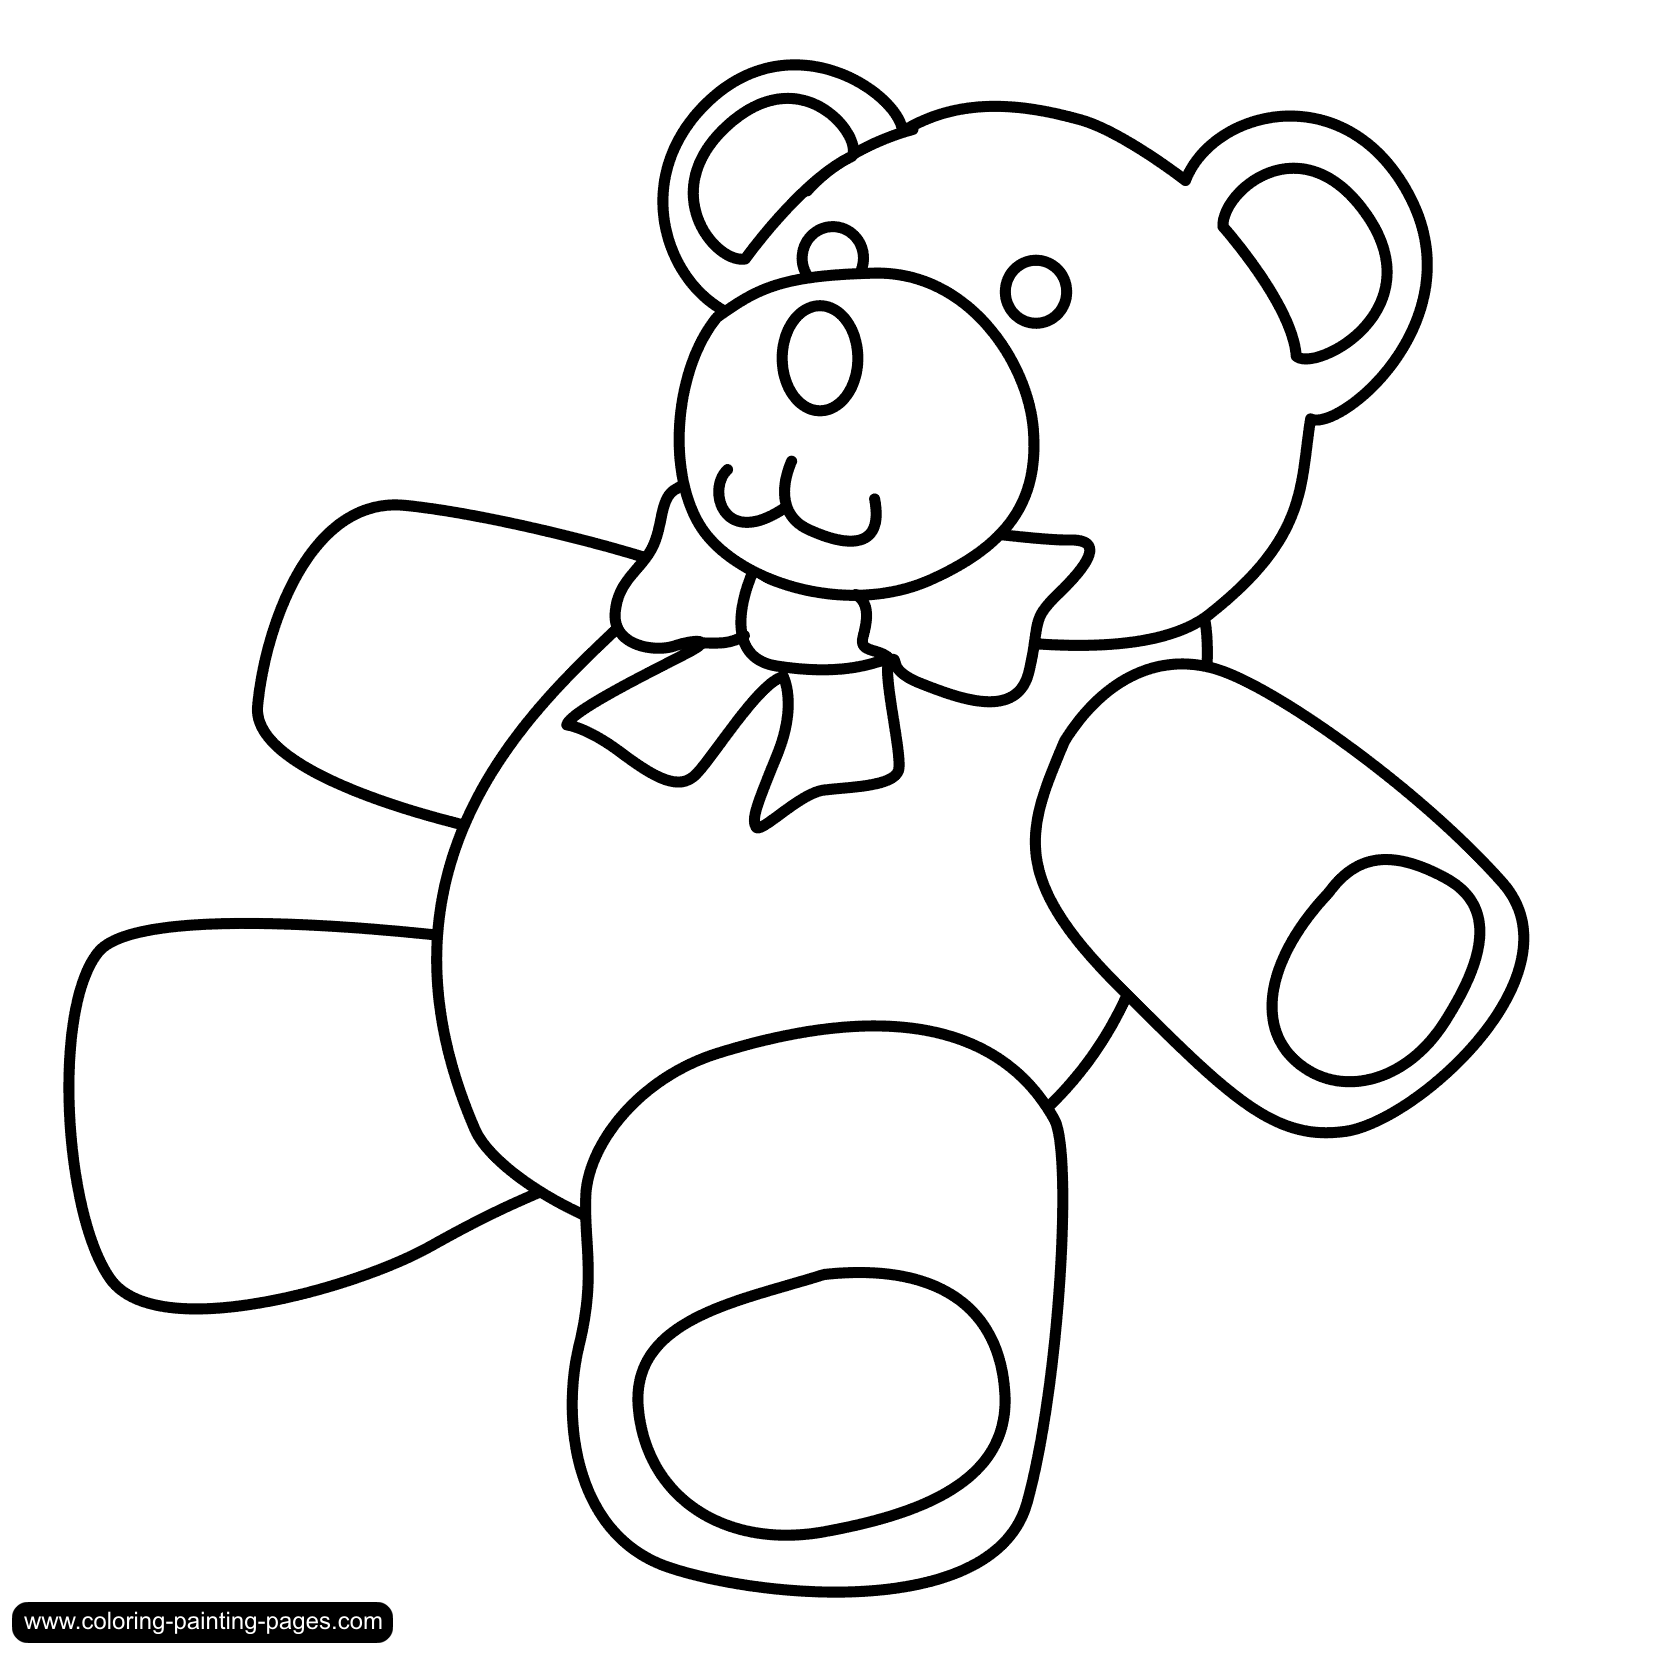 Bear  black and white teddy bear clipart black and white pdxkurt 2